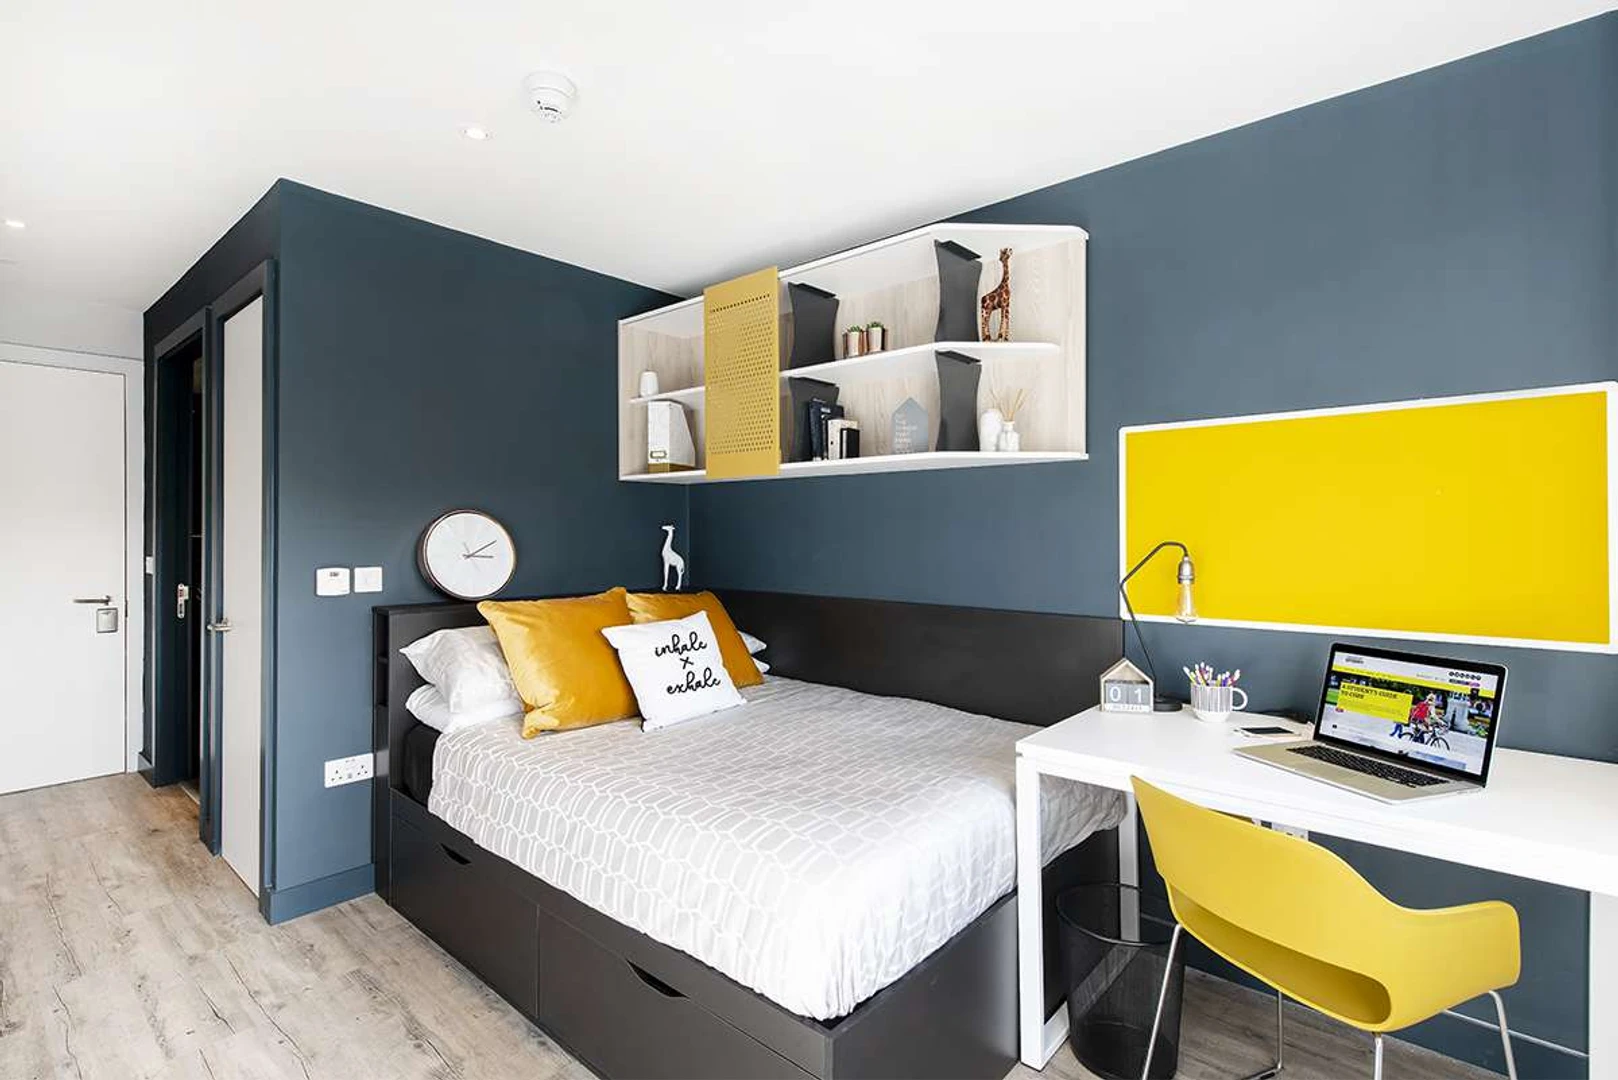 Cheap private room in Cork